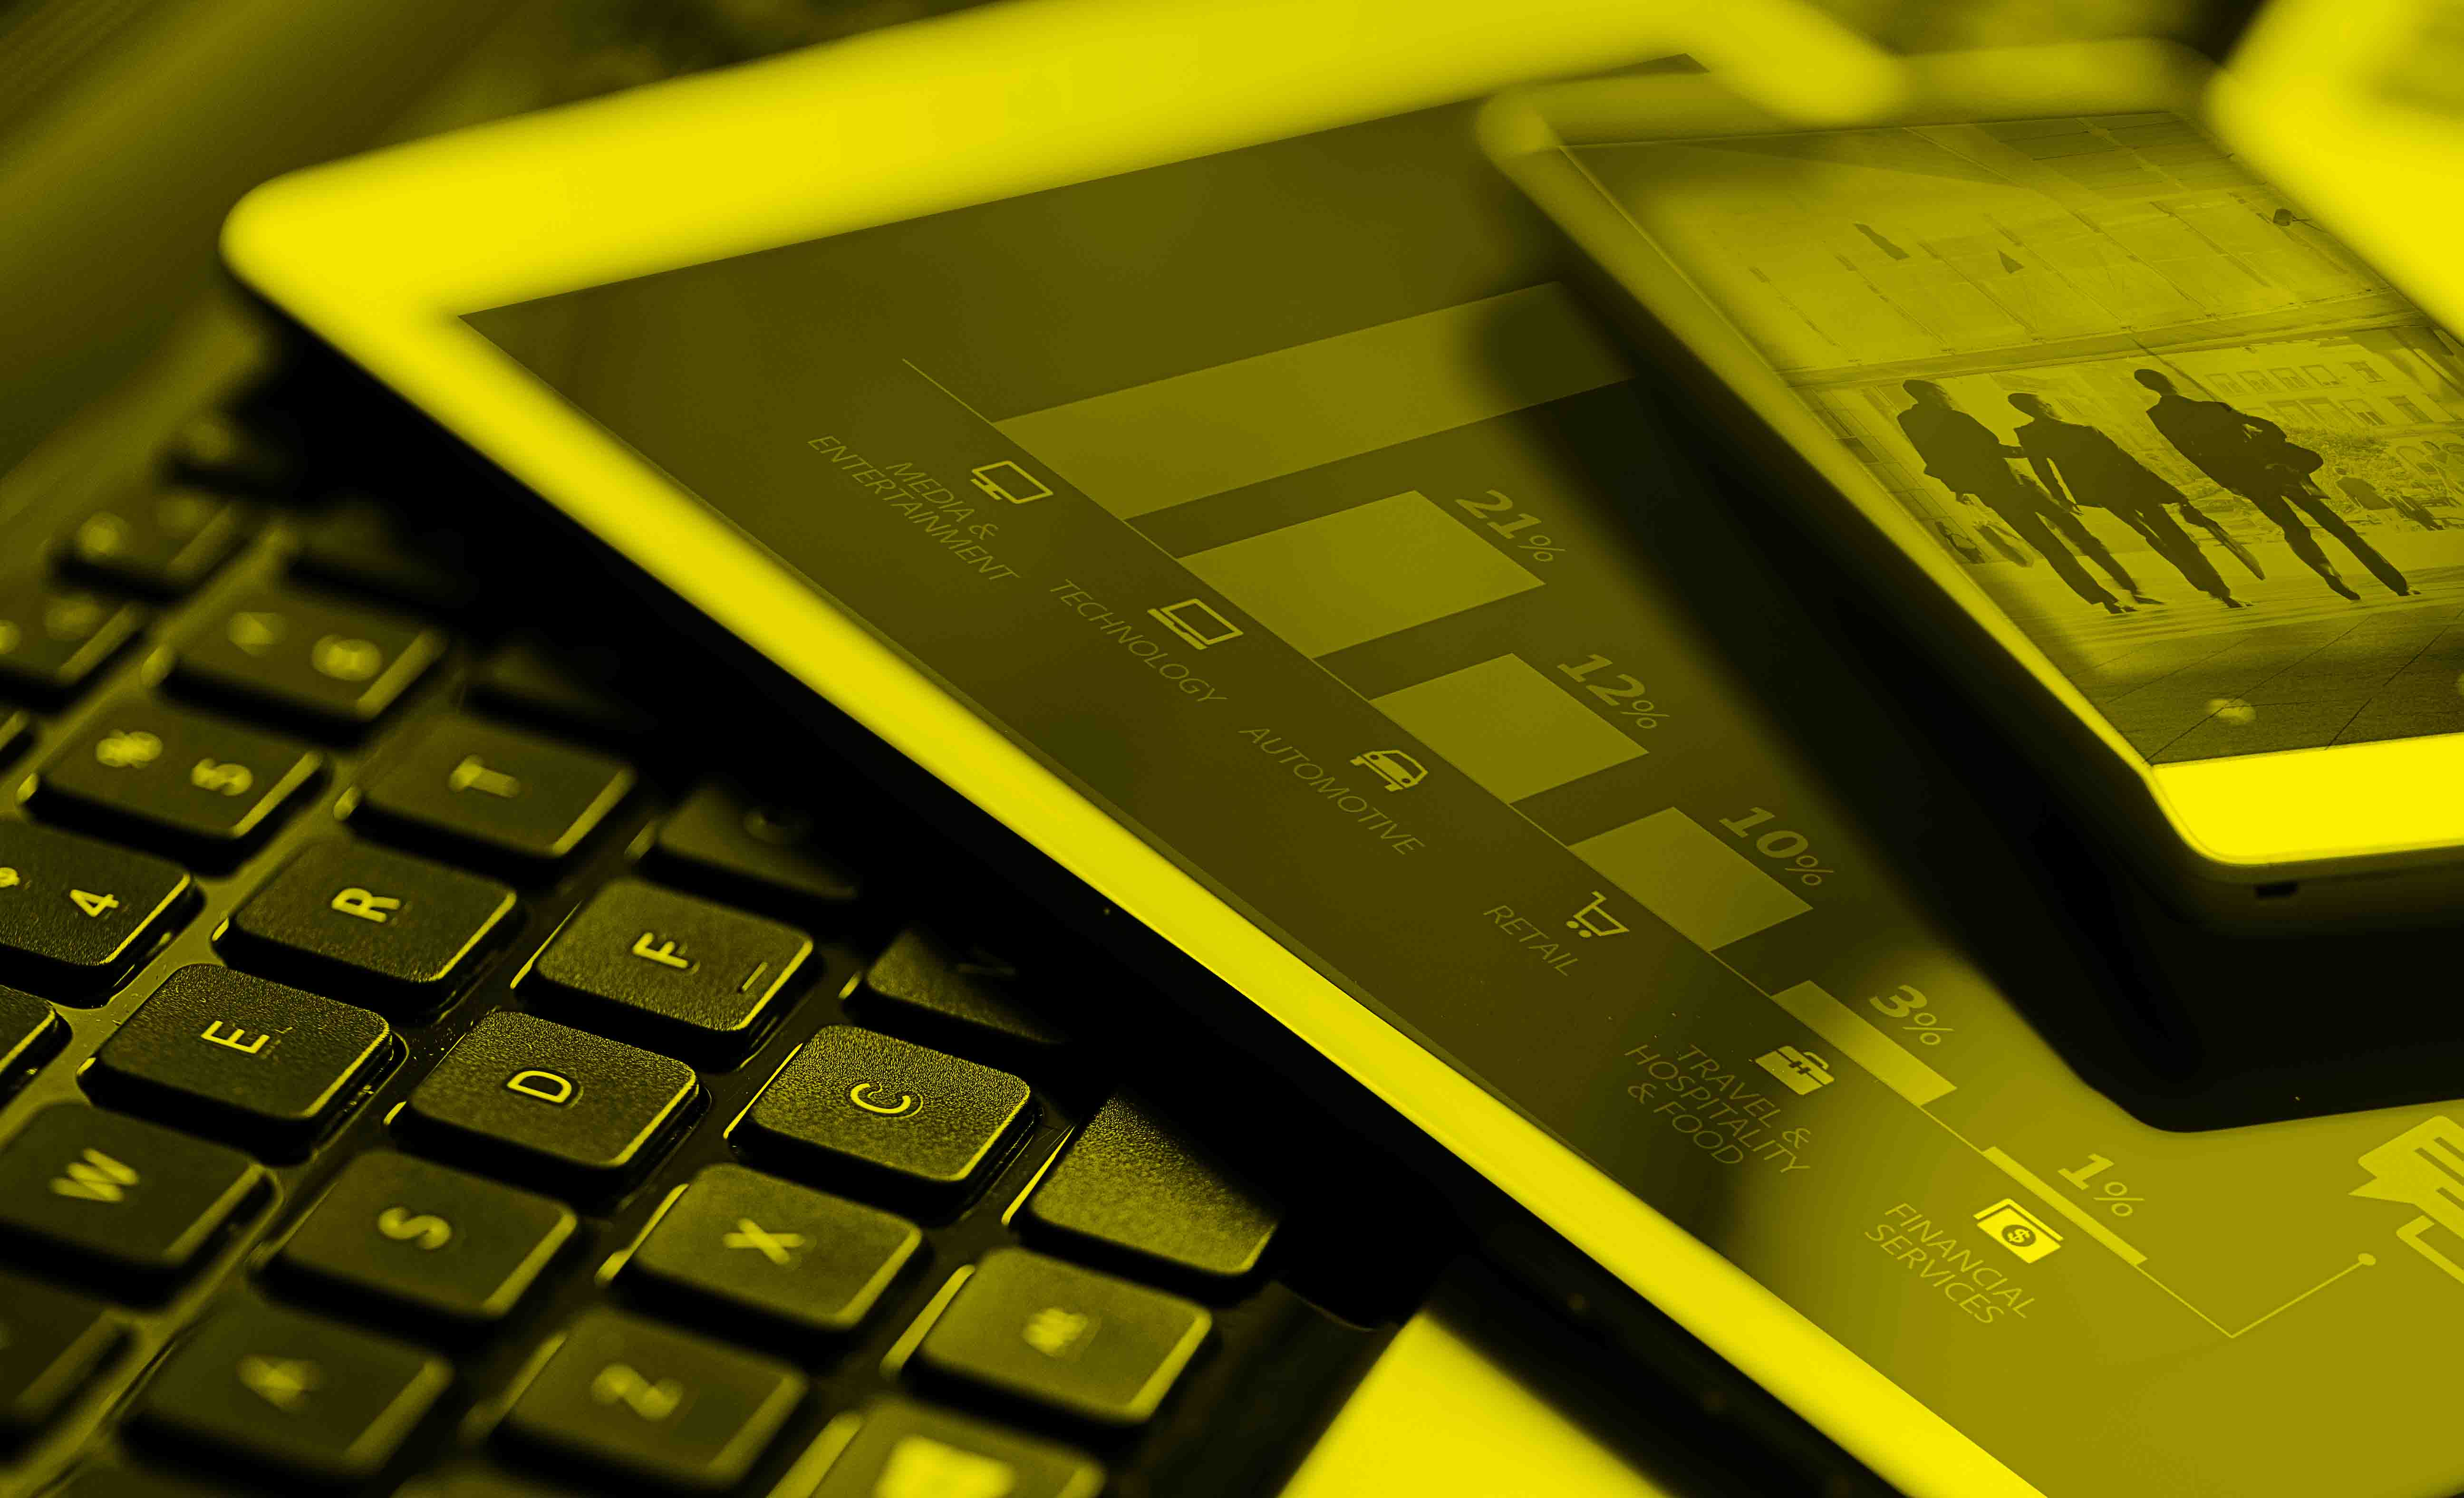 mobile tablet keyboard screen yellow.jpg